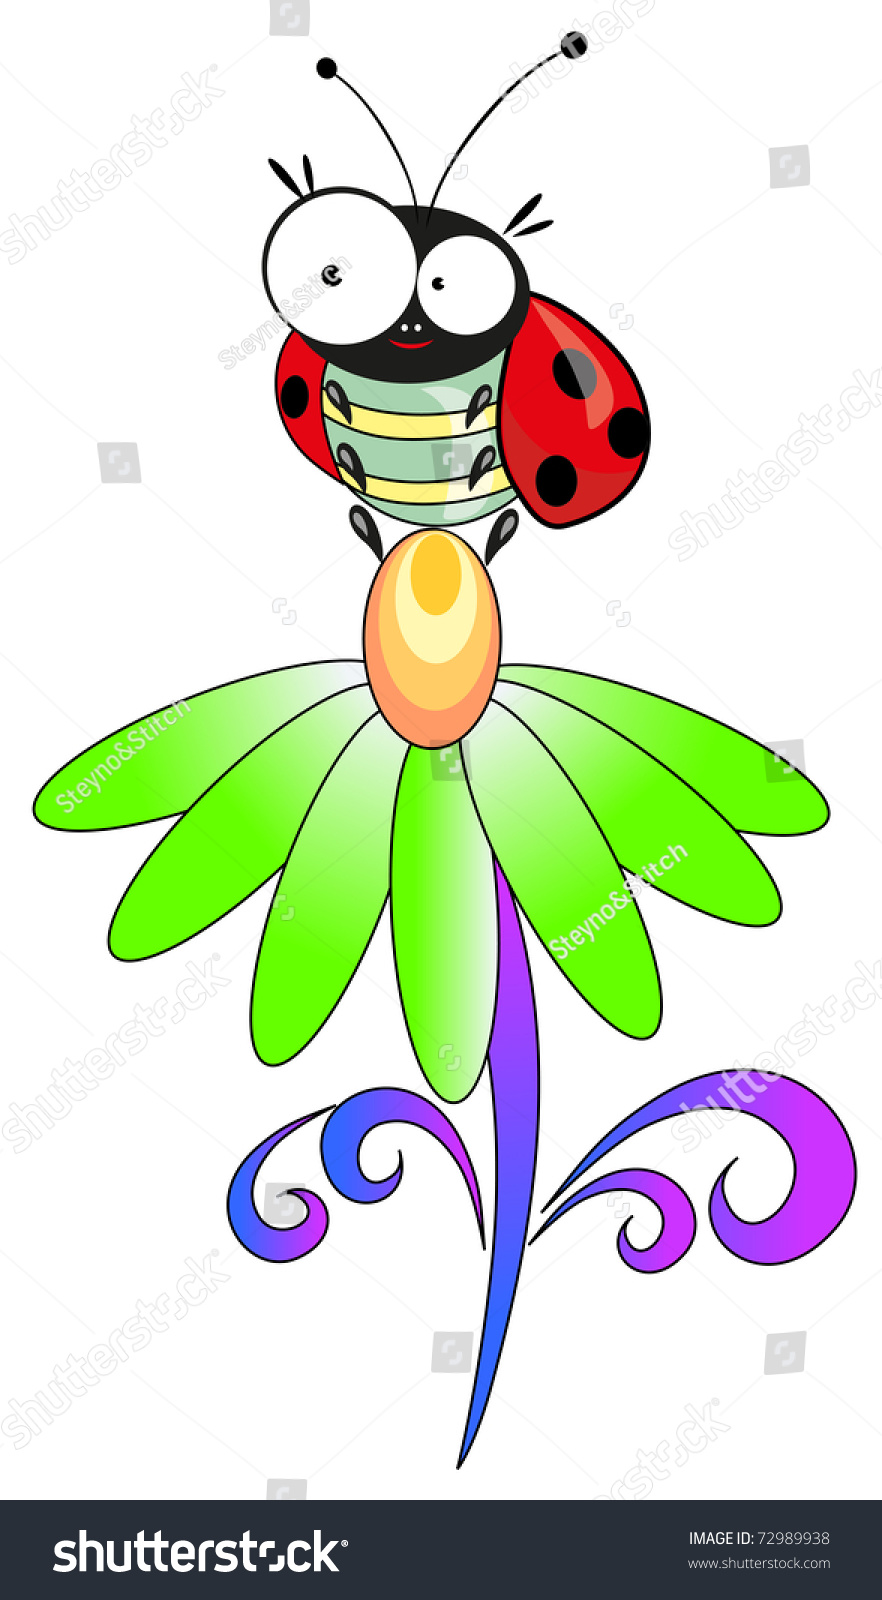 Ladybug And Flower. Vector Illustration. - 72989938 : Shutterstock